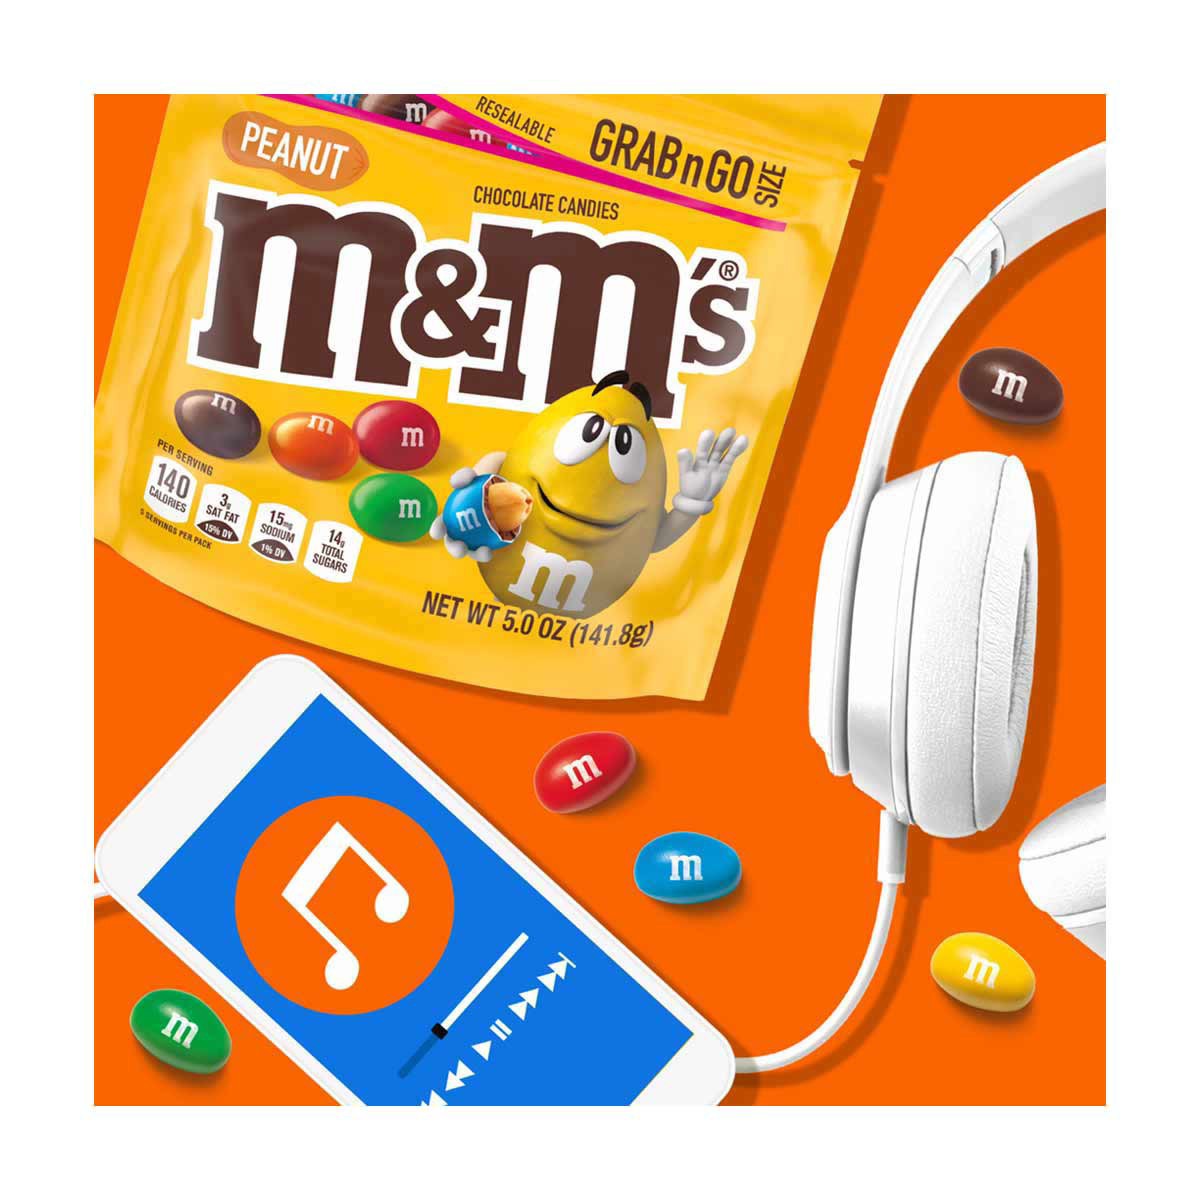 M&M's Peanut Chocolate Candy, Grab N Go Size Bag, 5 Oz